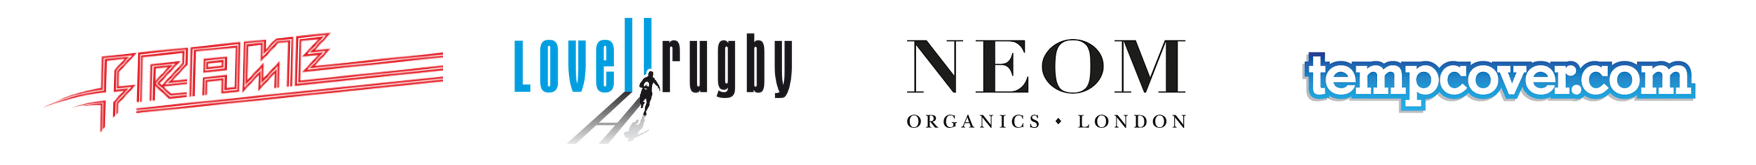 Neom Organics